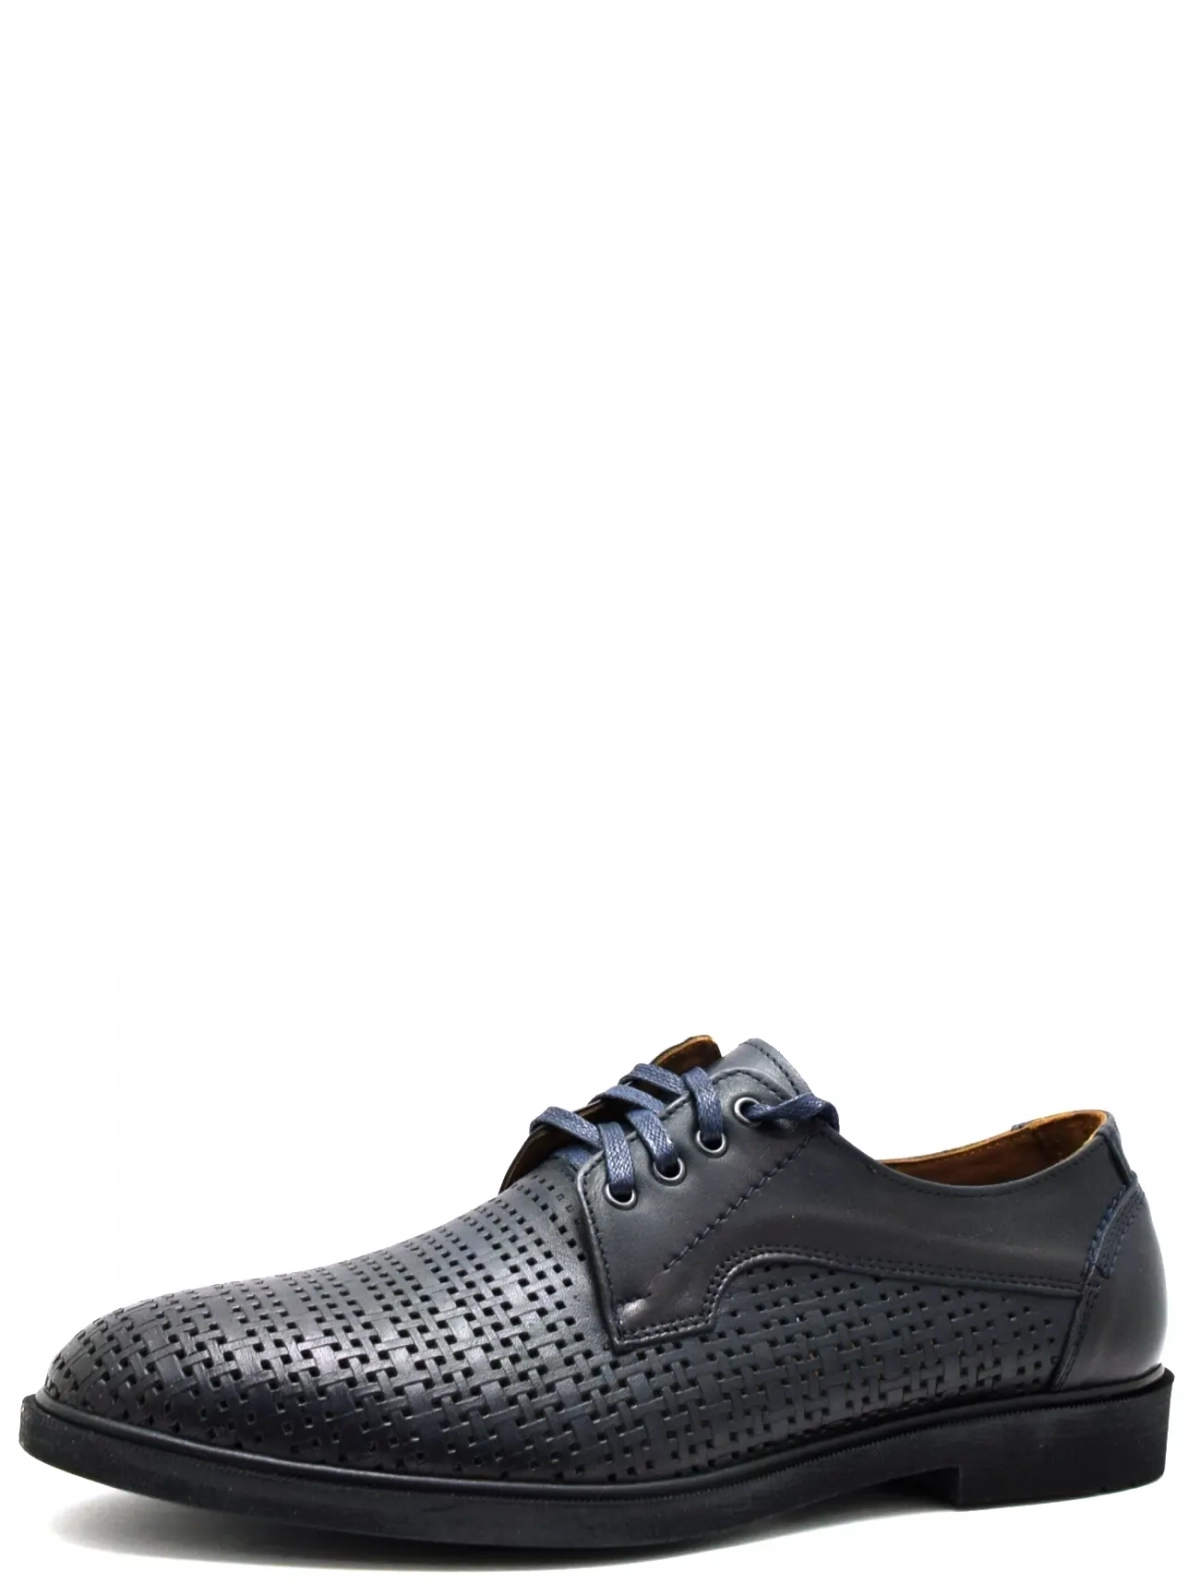 Baratto 5-379-204-5 мужские туфли